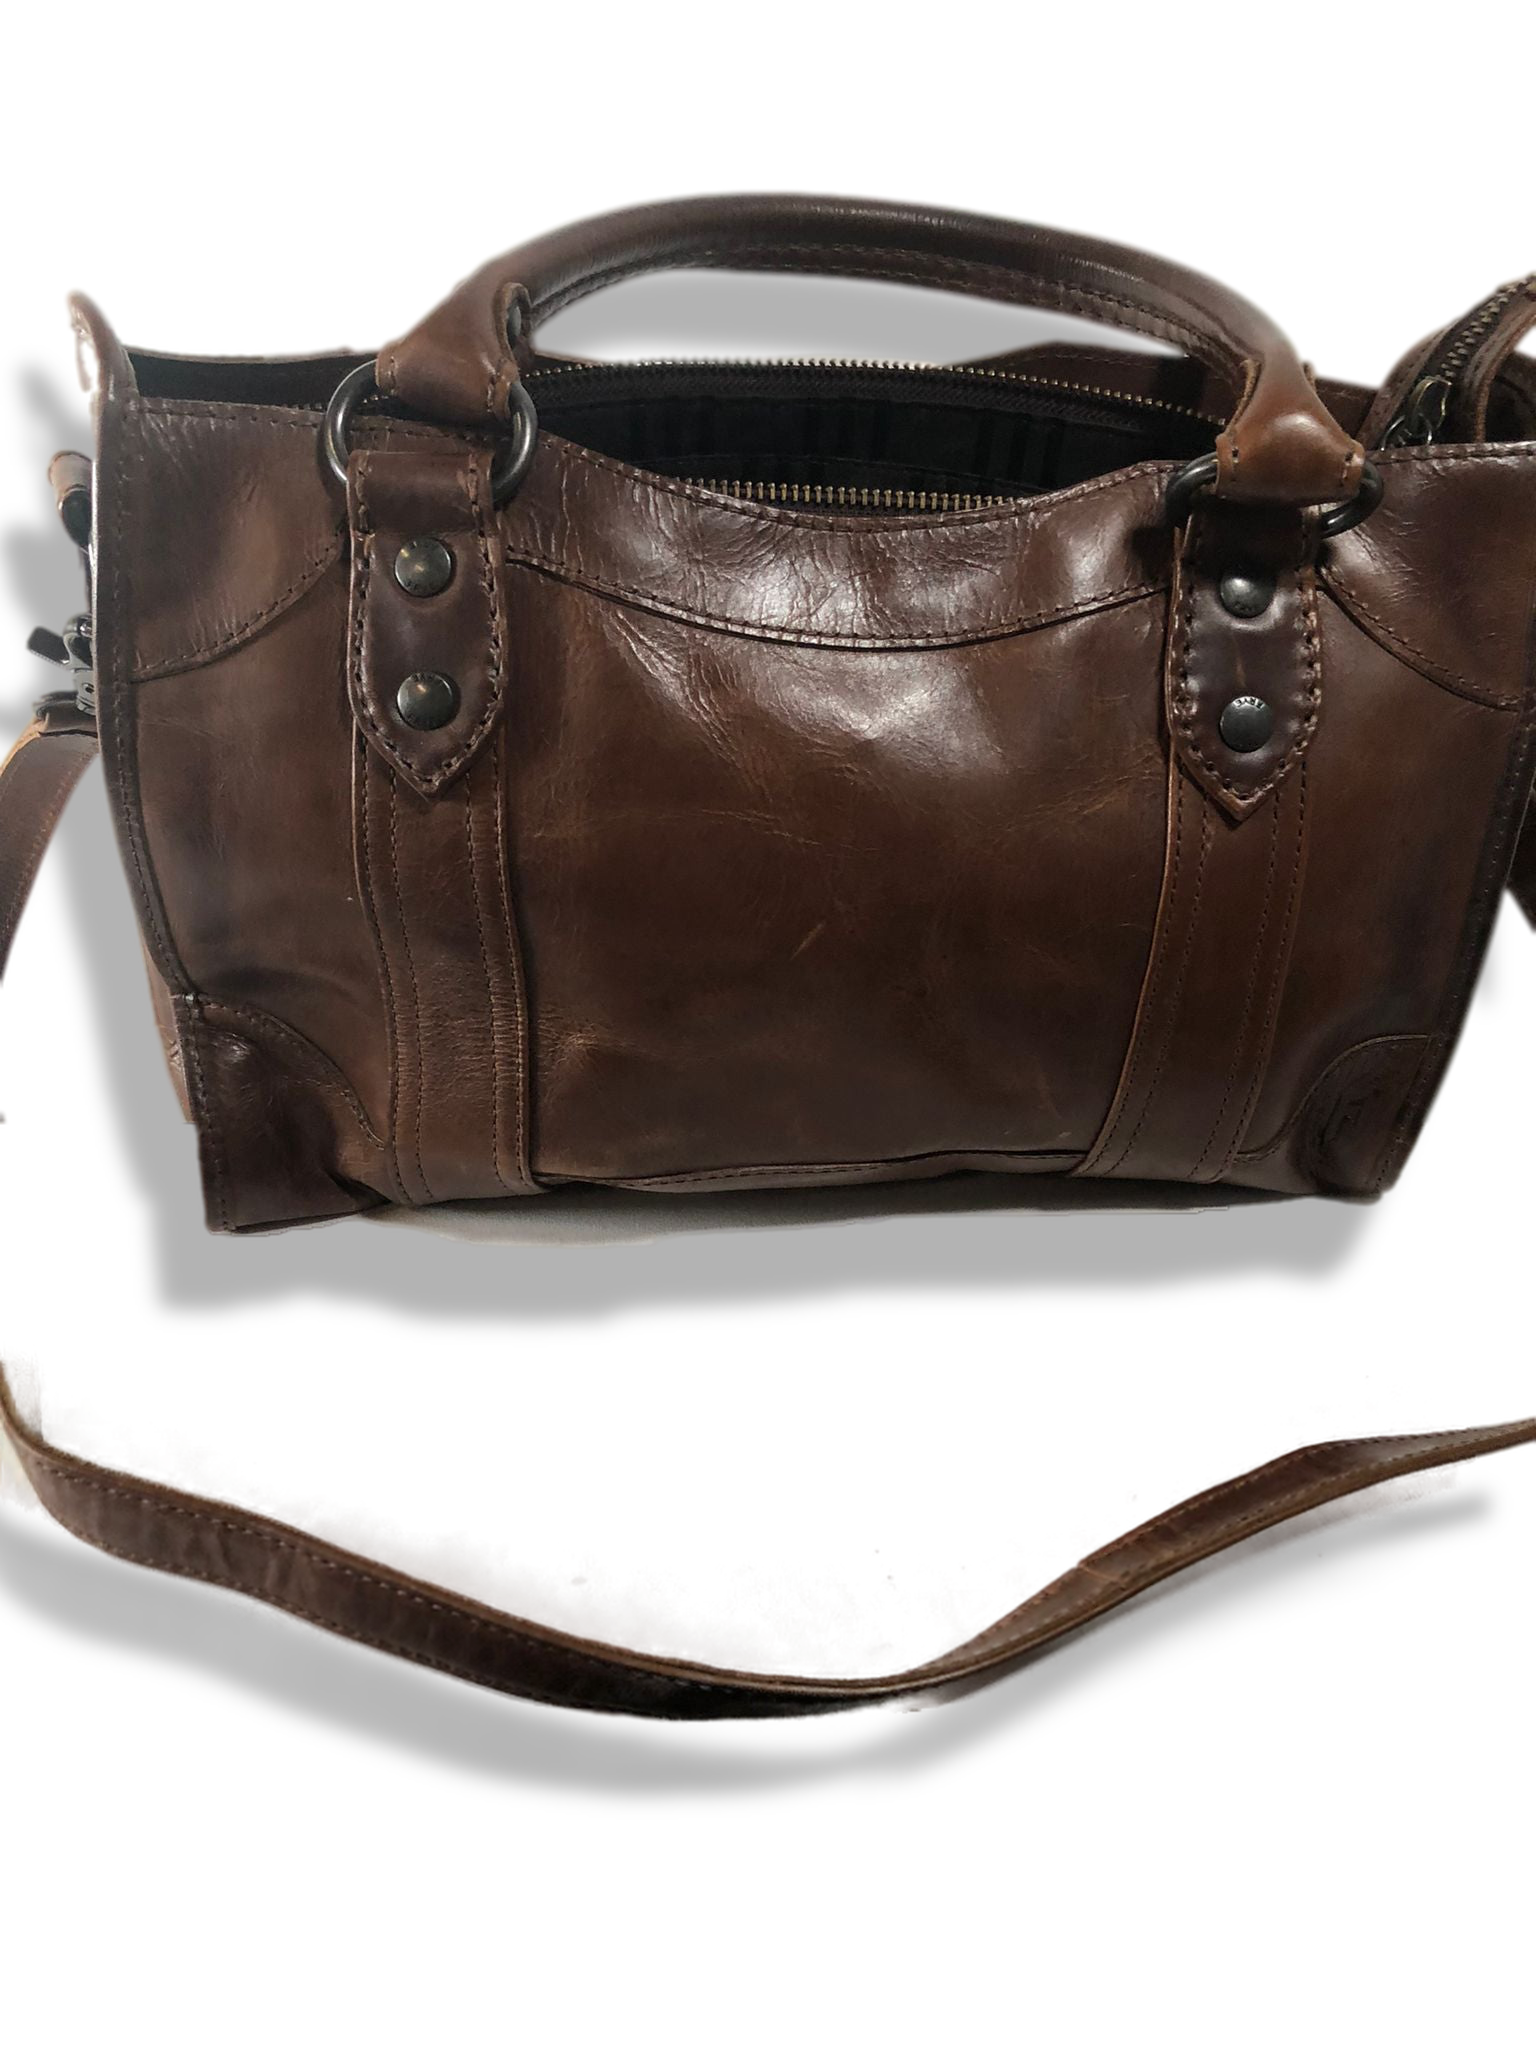 Frye Melissa Leather Satchel Handbag with Removable Crossbody Strap